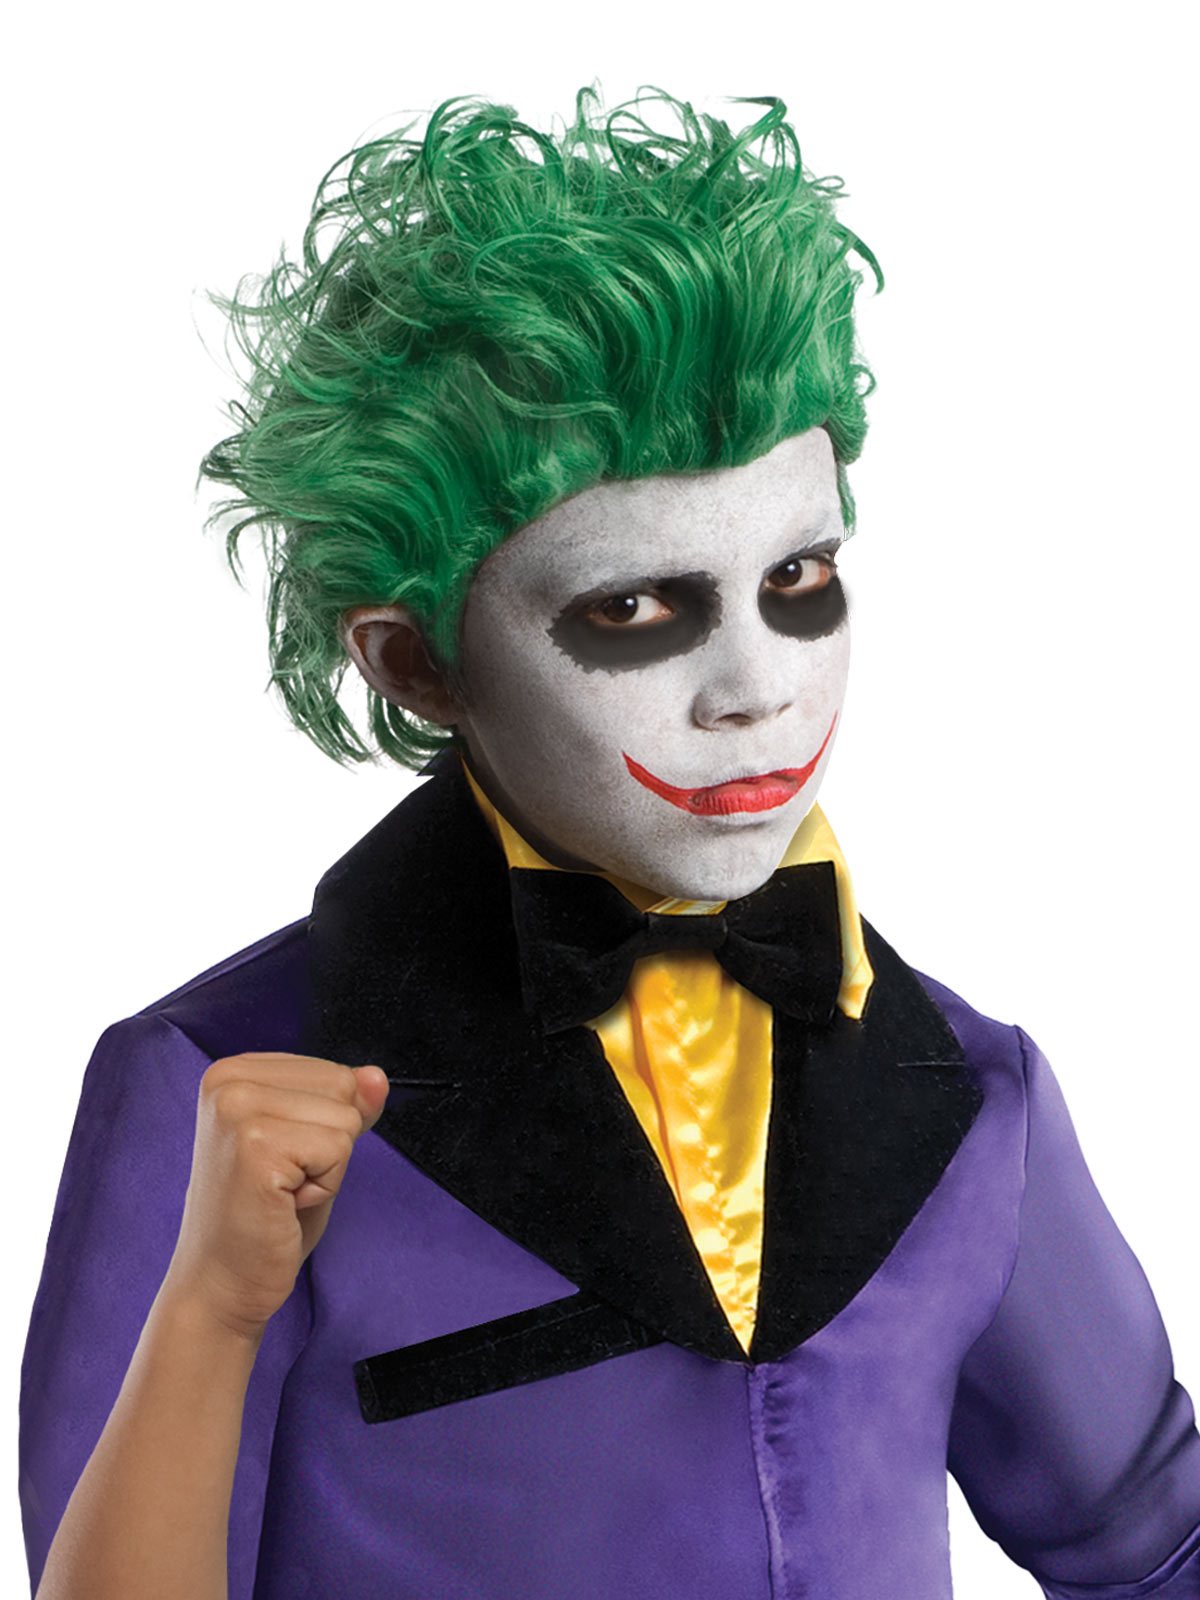 Costume Child The Joker 8-10